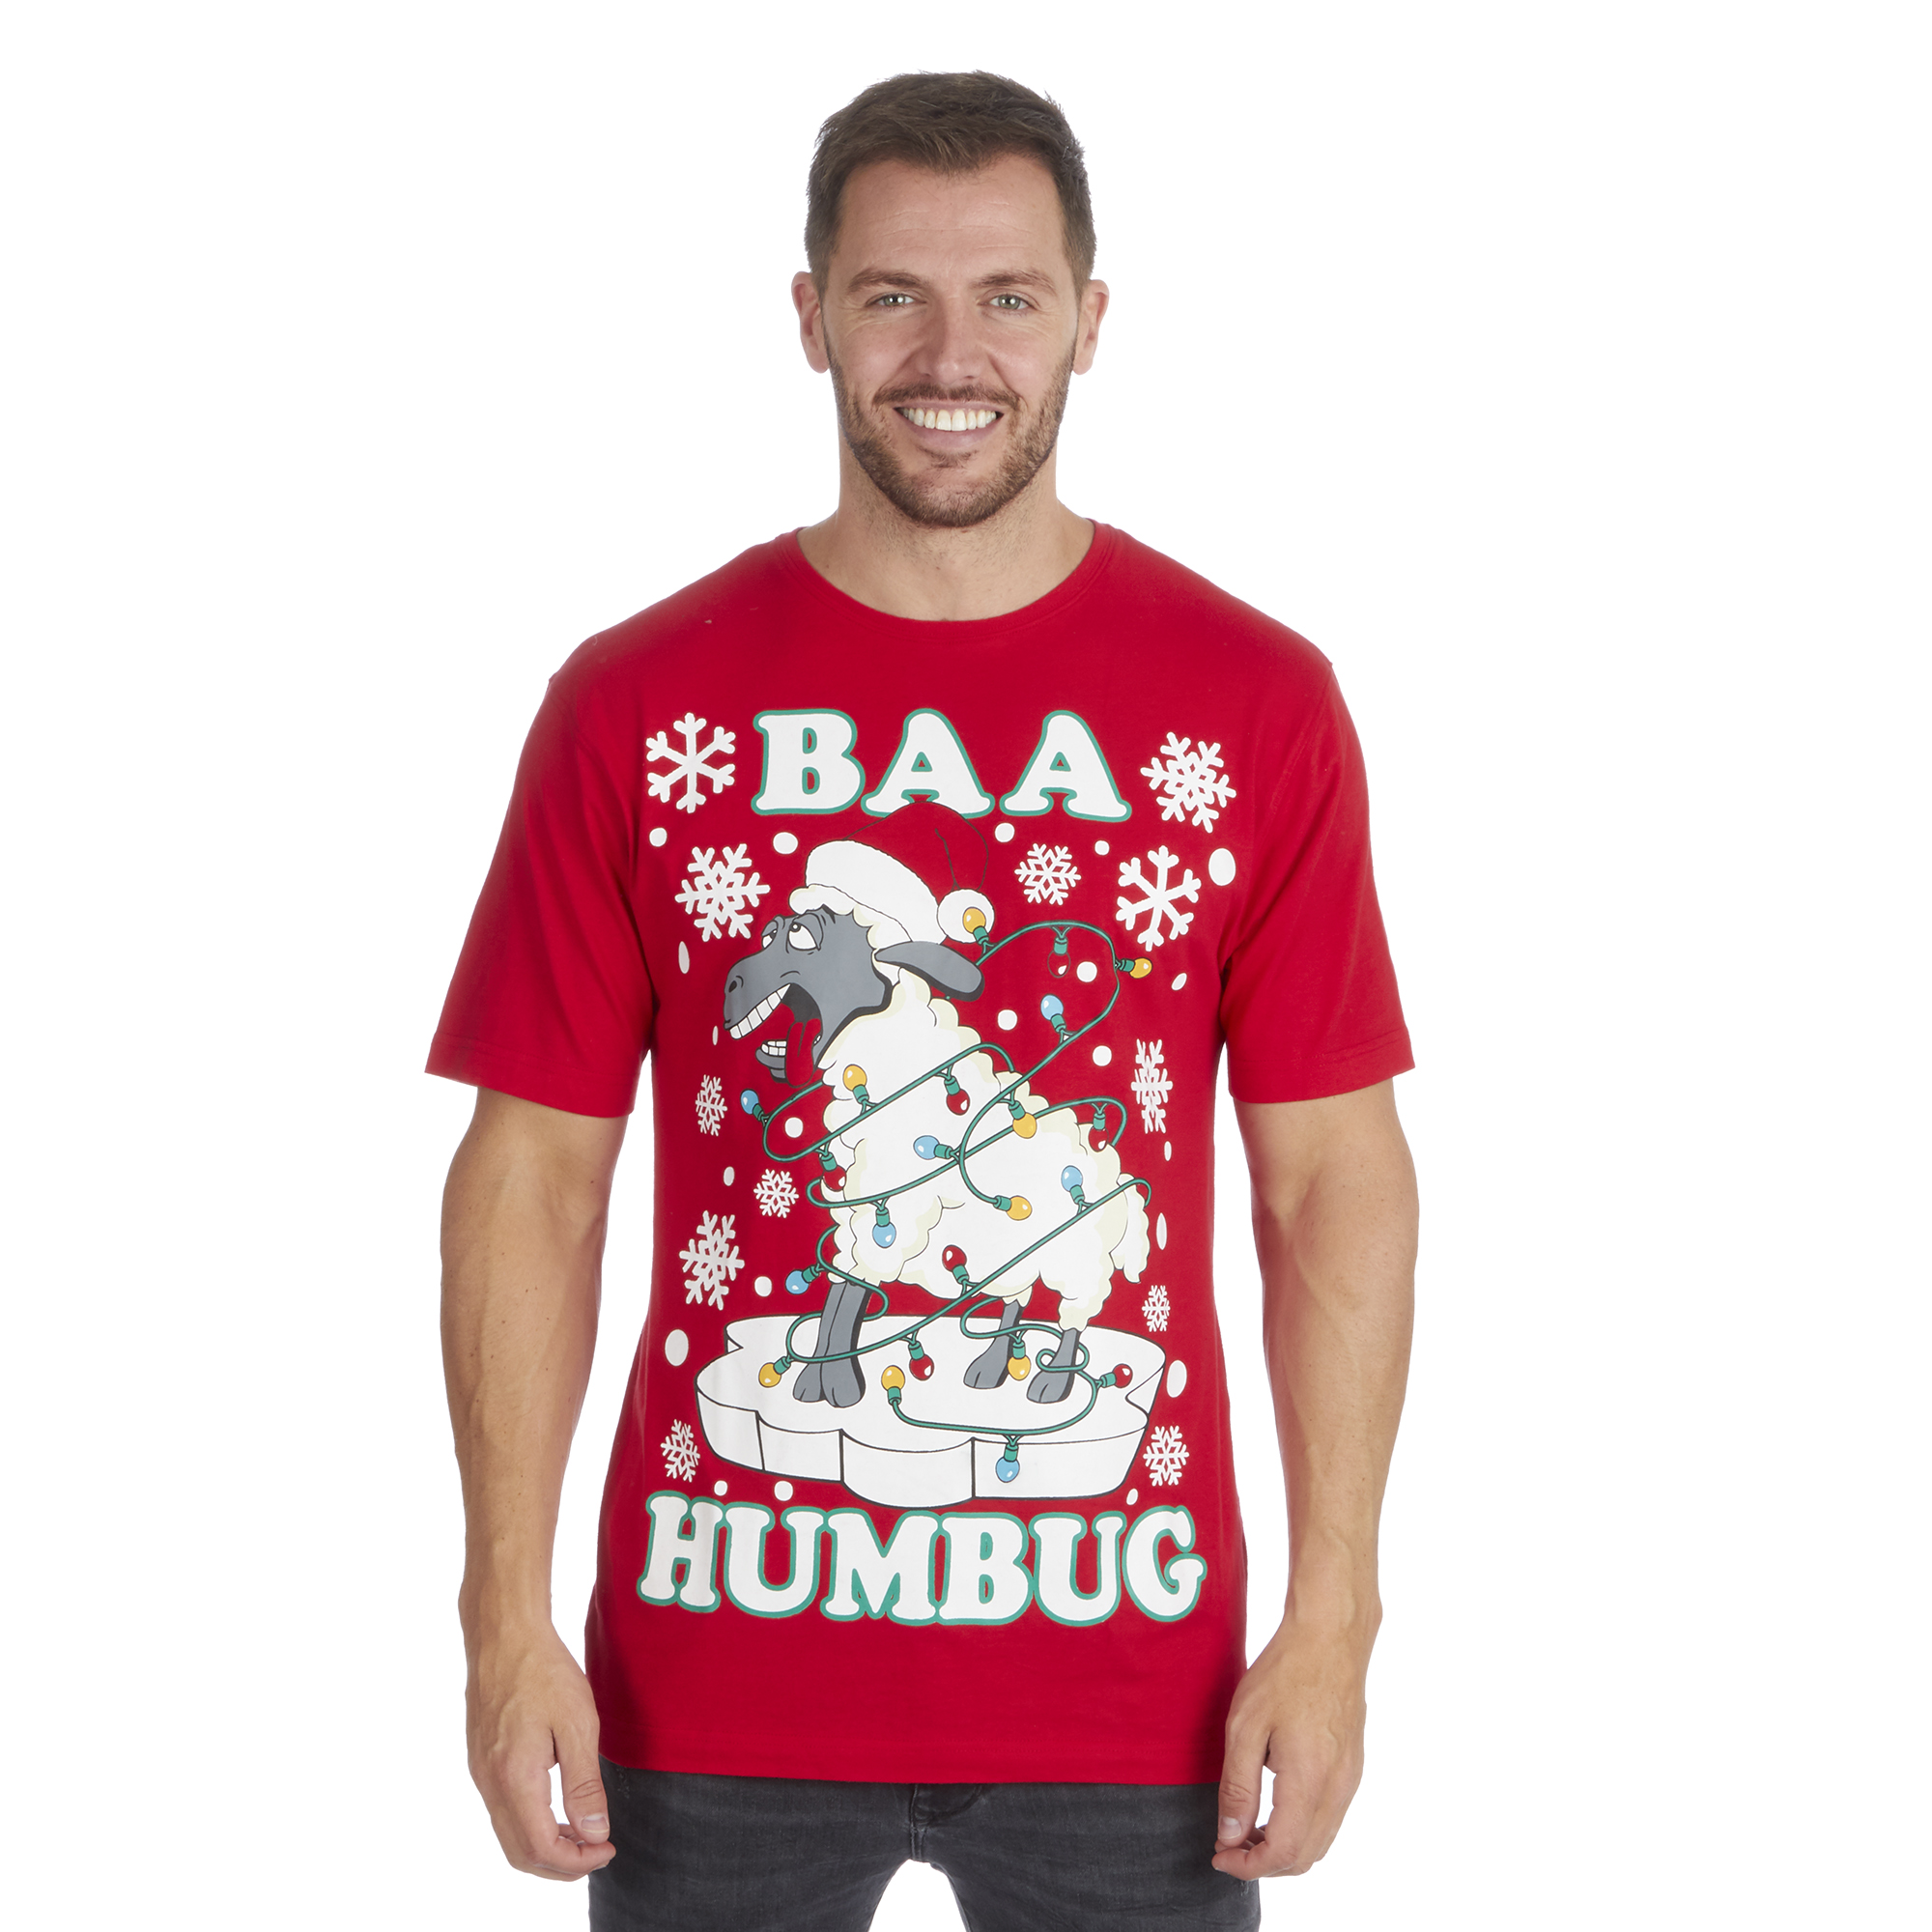 Mens Womens Naughty Cotton Funny Christmas Xmas Top T Shirt Joke Funky Tee S 5xl Ebay